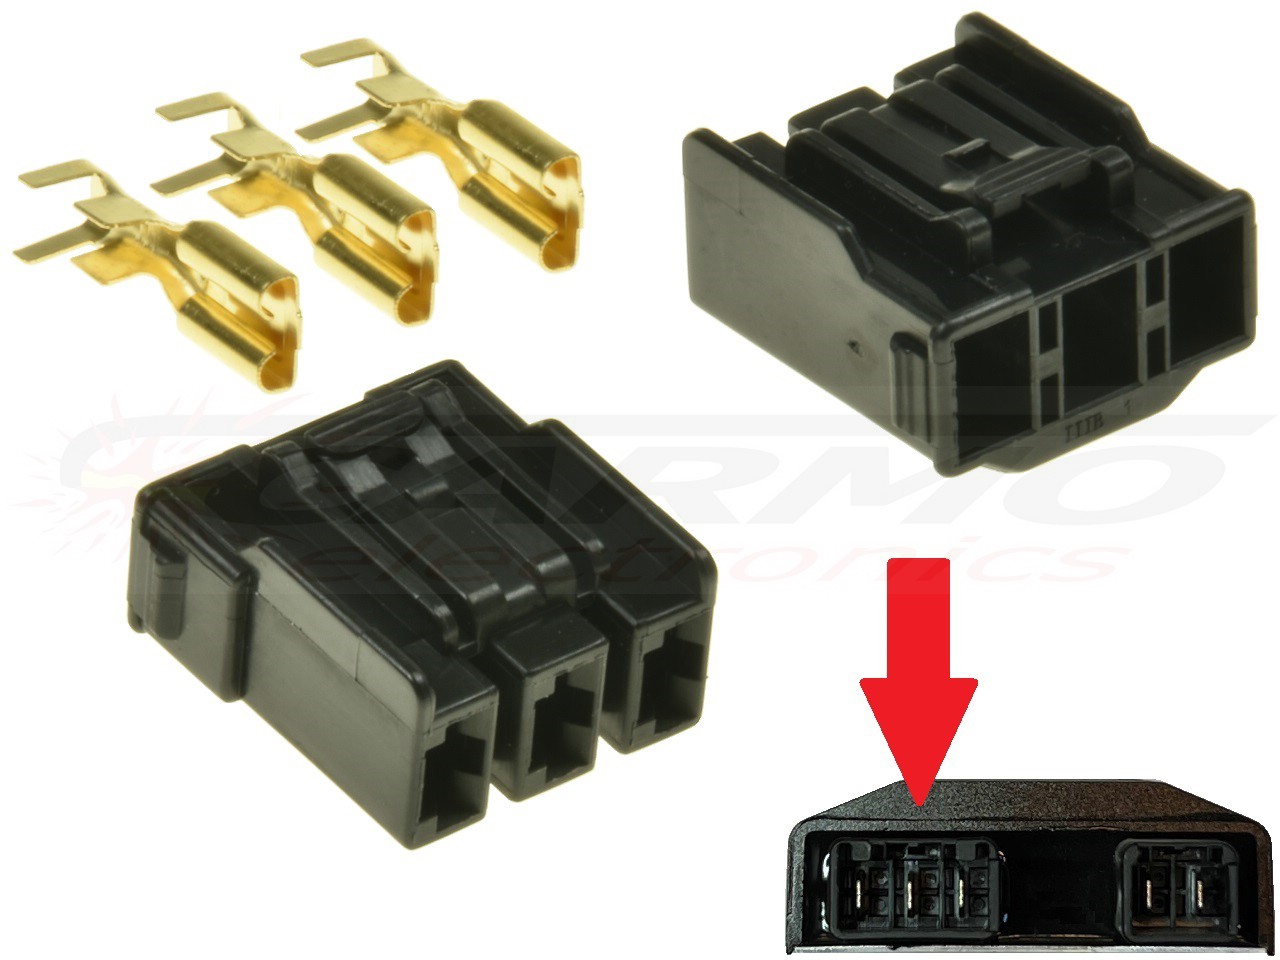 CARR2102 Honda stator connector for voltage regulator rectifier FH014AA / SH750AA - Clique na Imagem para Fechar